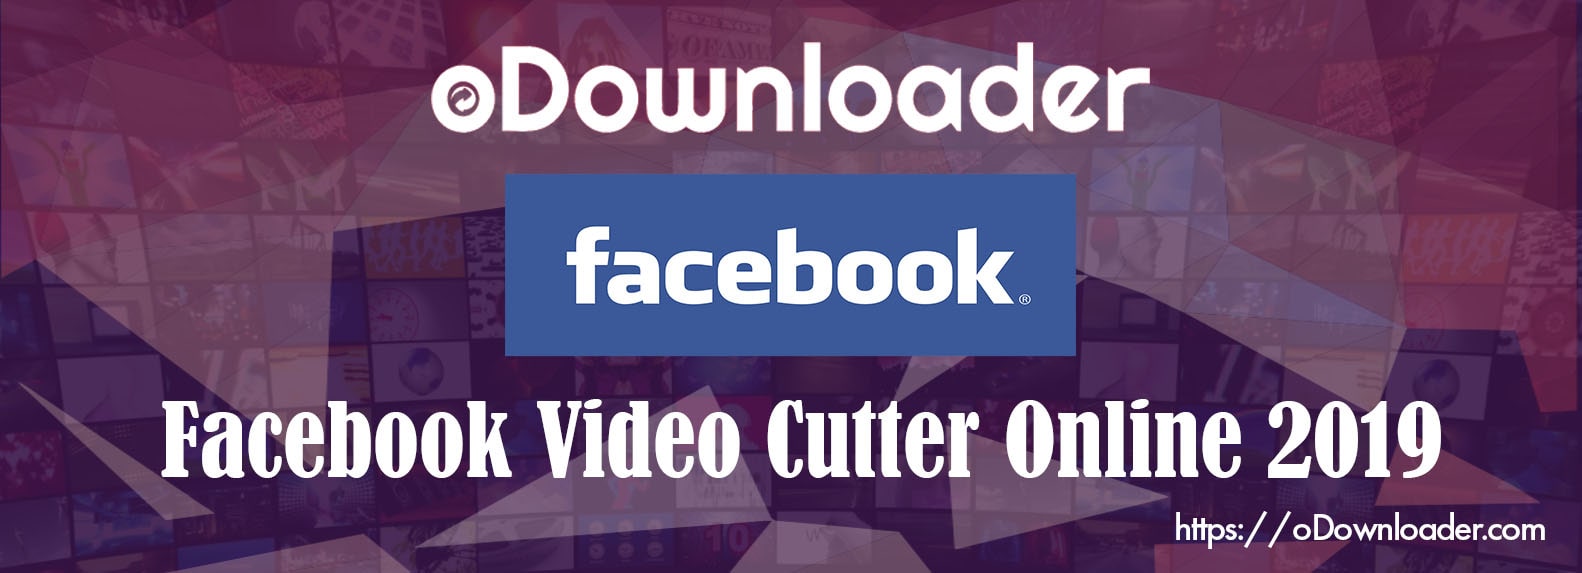 fb videos cutter online free 2019 Odownloader